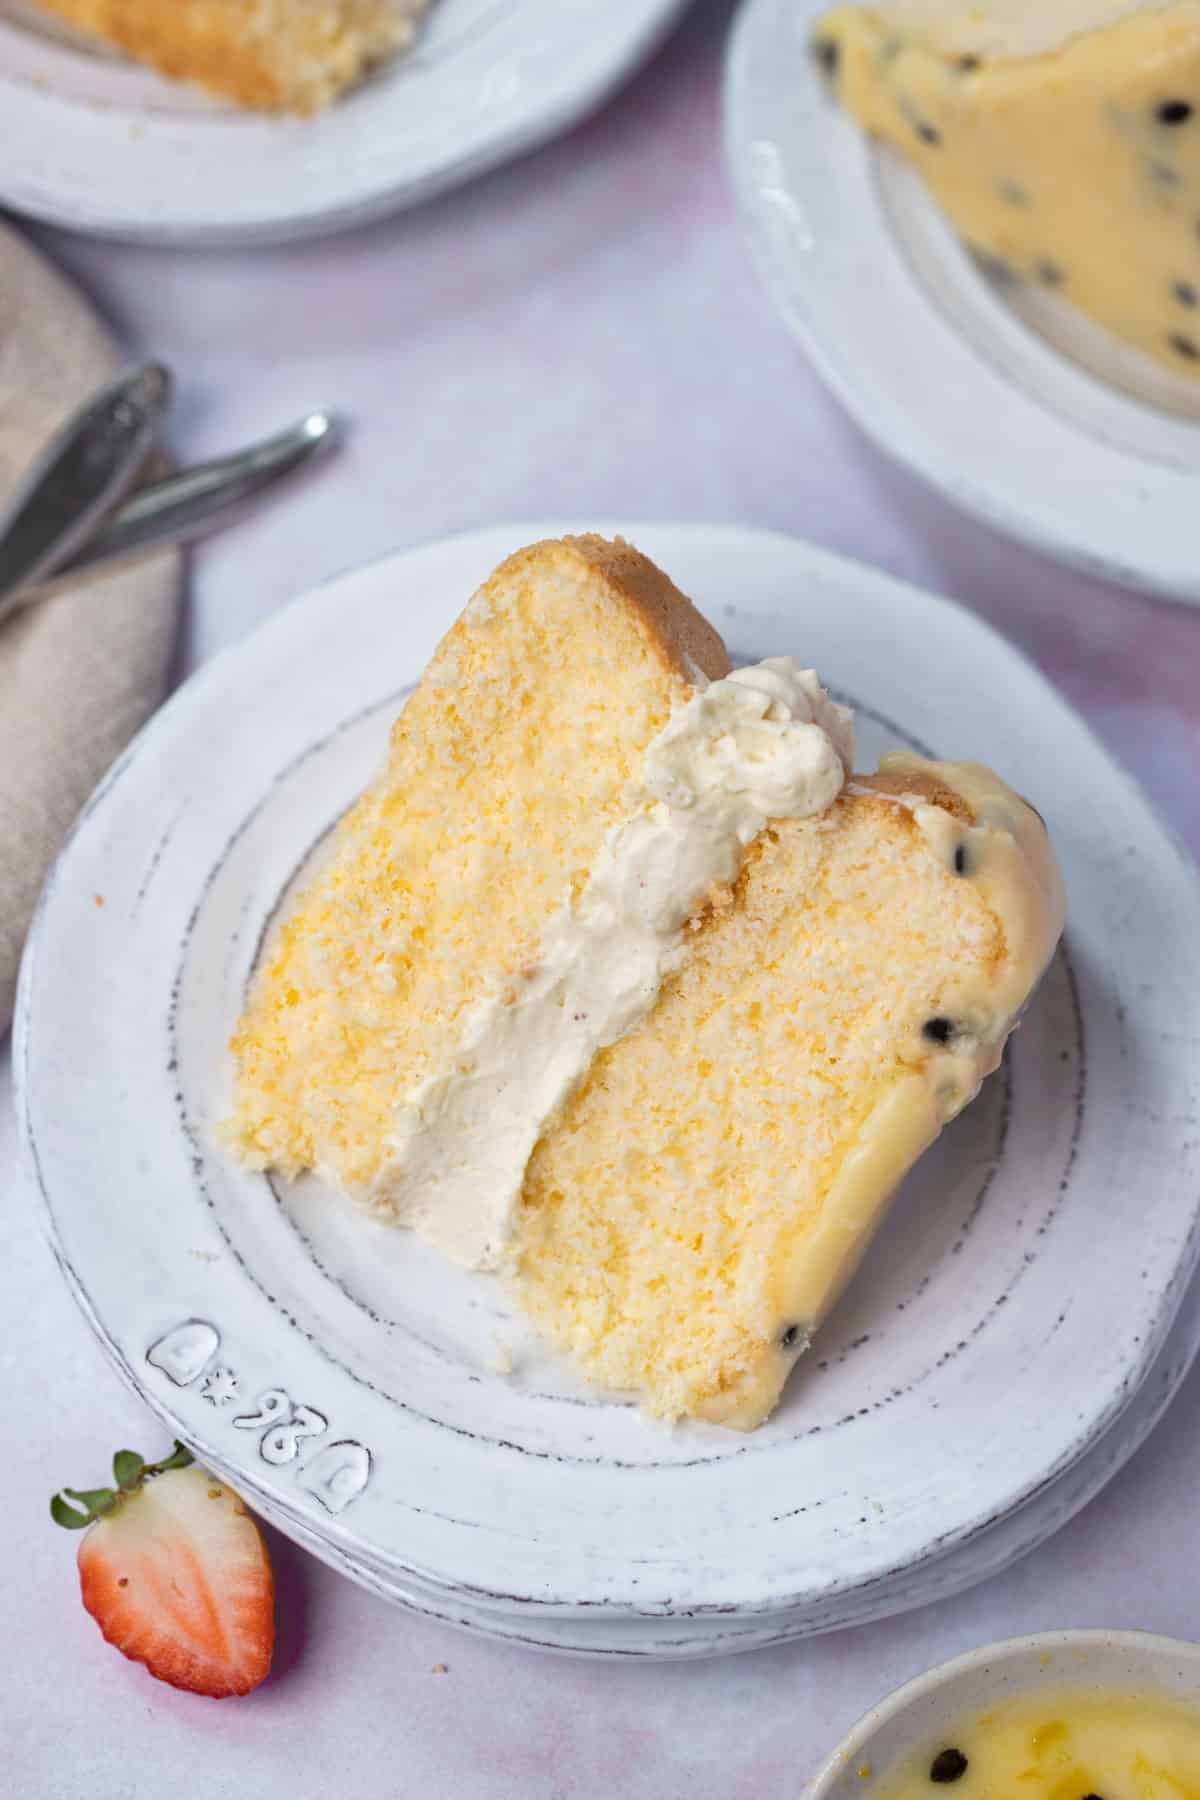 a piece of sponge cake on a white plate.